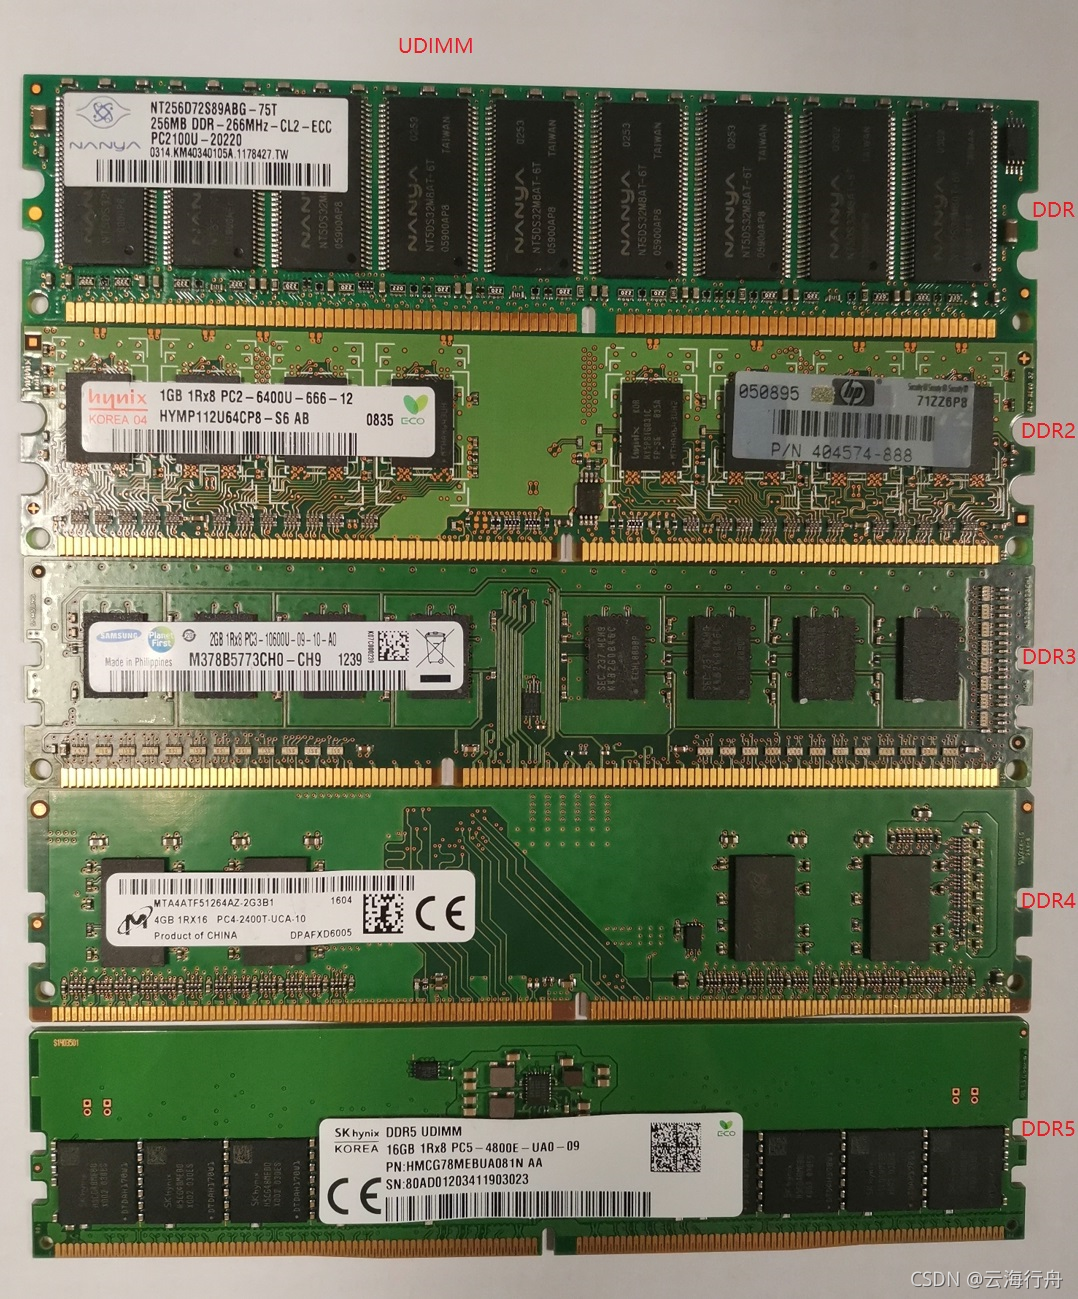 ddr3为什么比ssd快 探究 DDR3 超越 SSD 速度的原因及两者间的联系  第2张